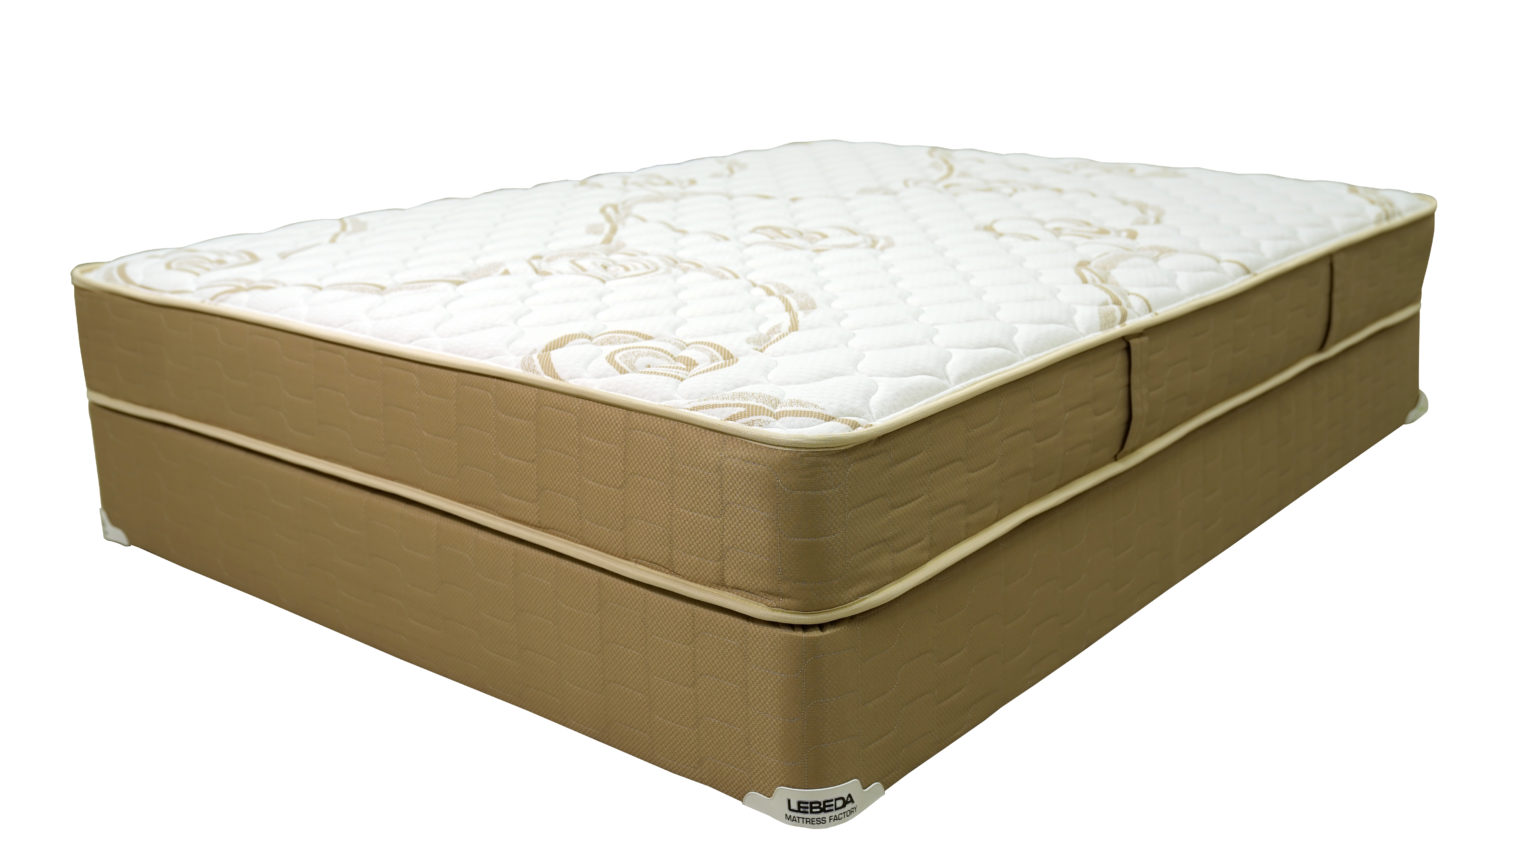 lebeda latex mattress review